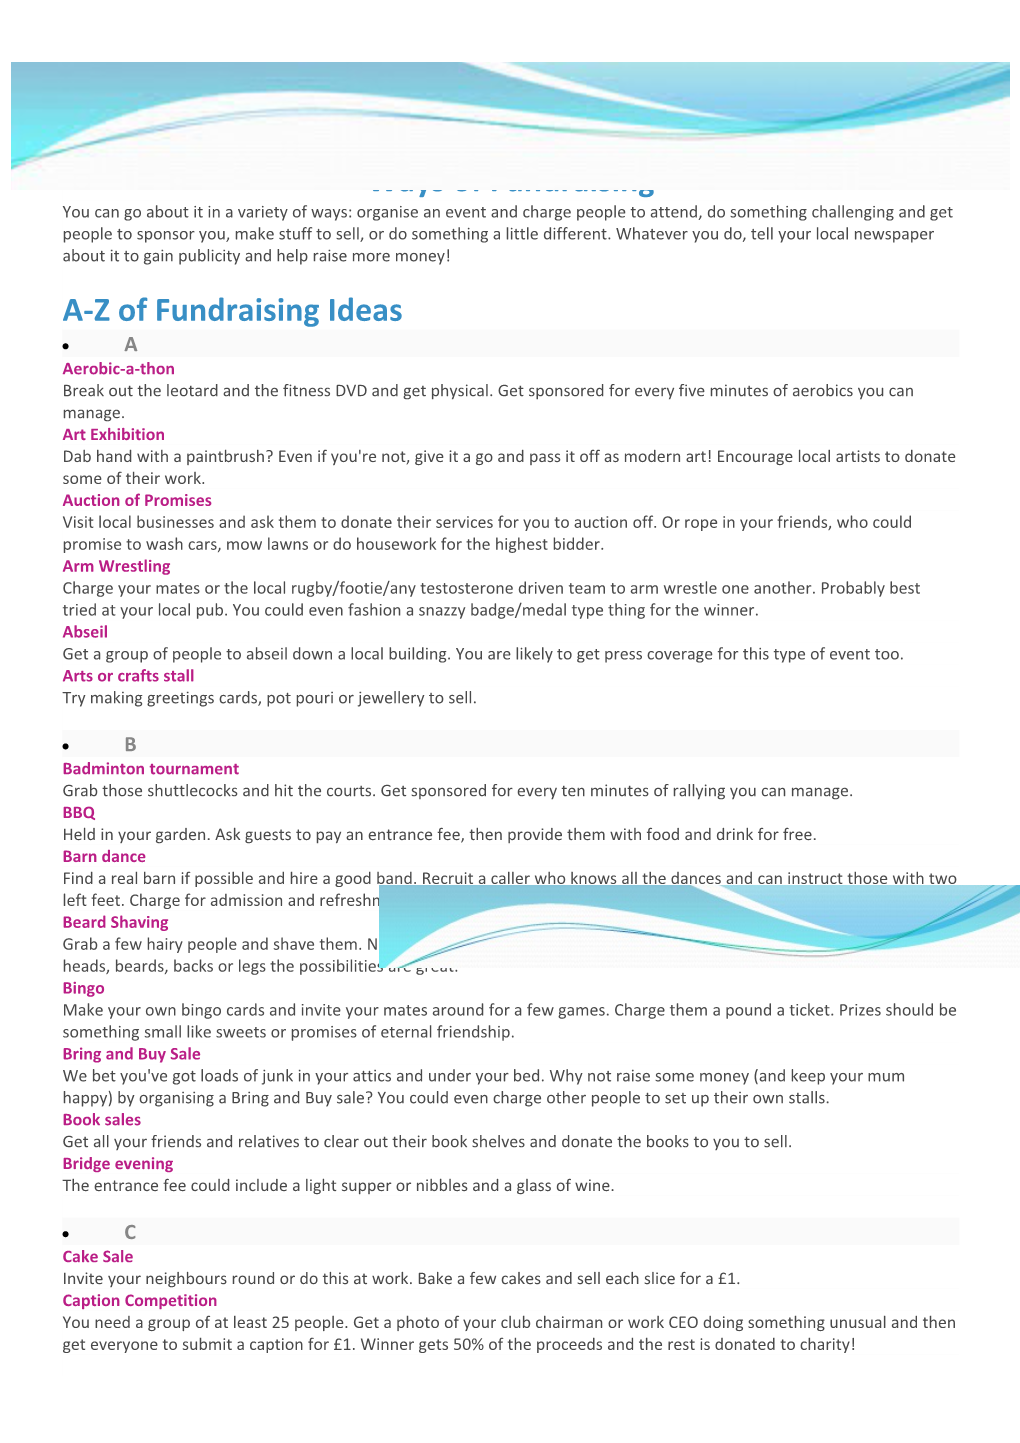 Ways of Fundraising